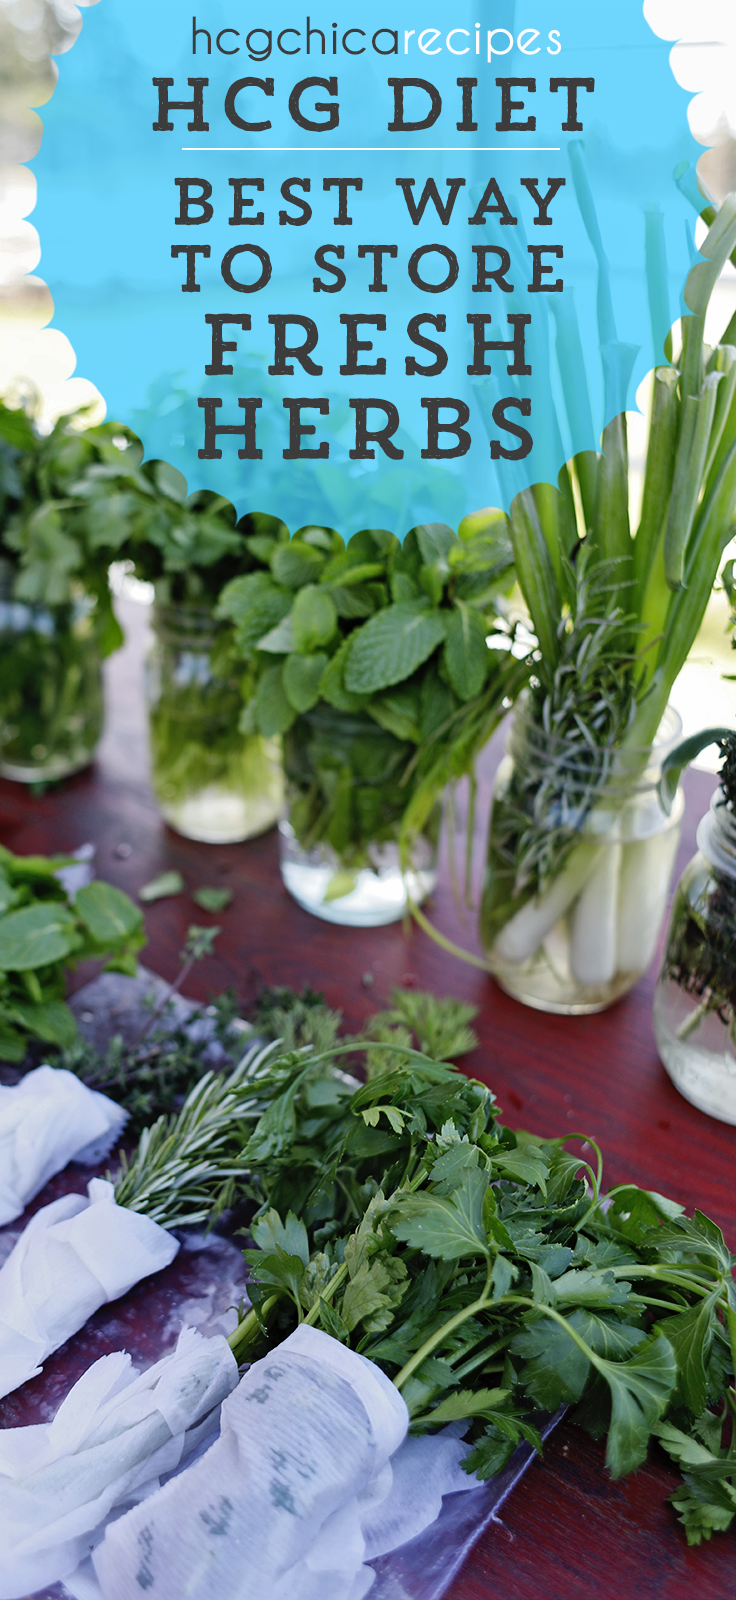 Storing Fresh Herbs on the hCG Diet during Phase 2 - hcgchicarecipes.com